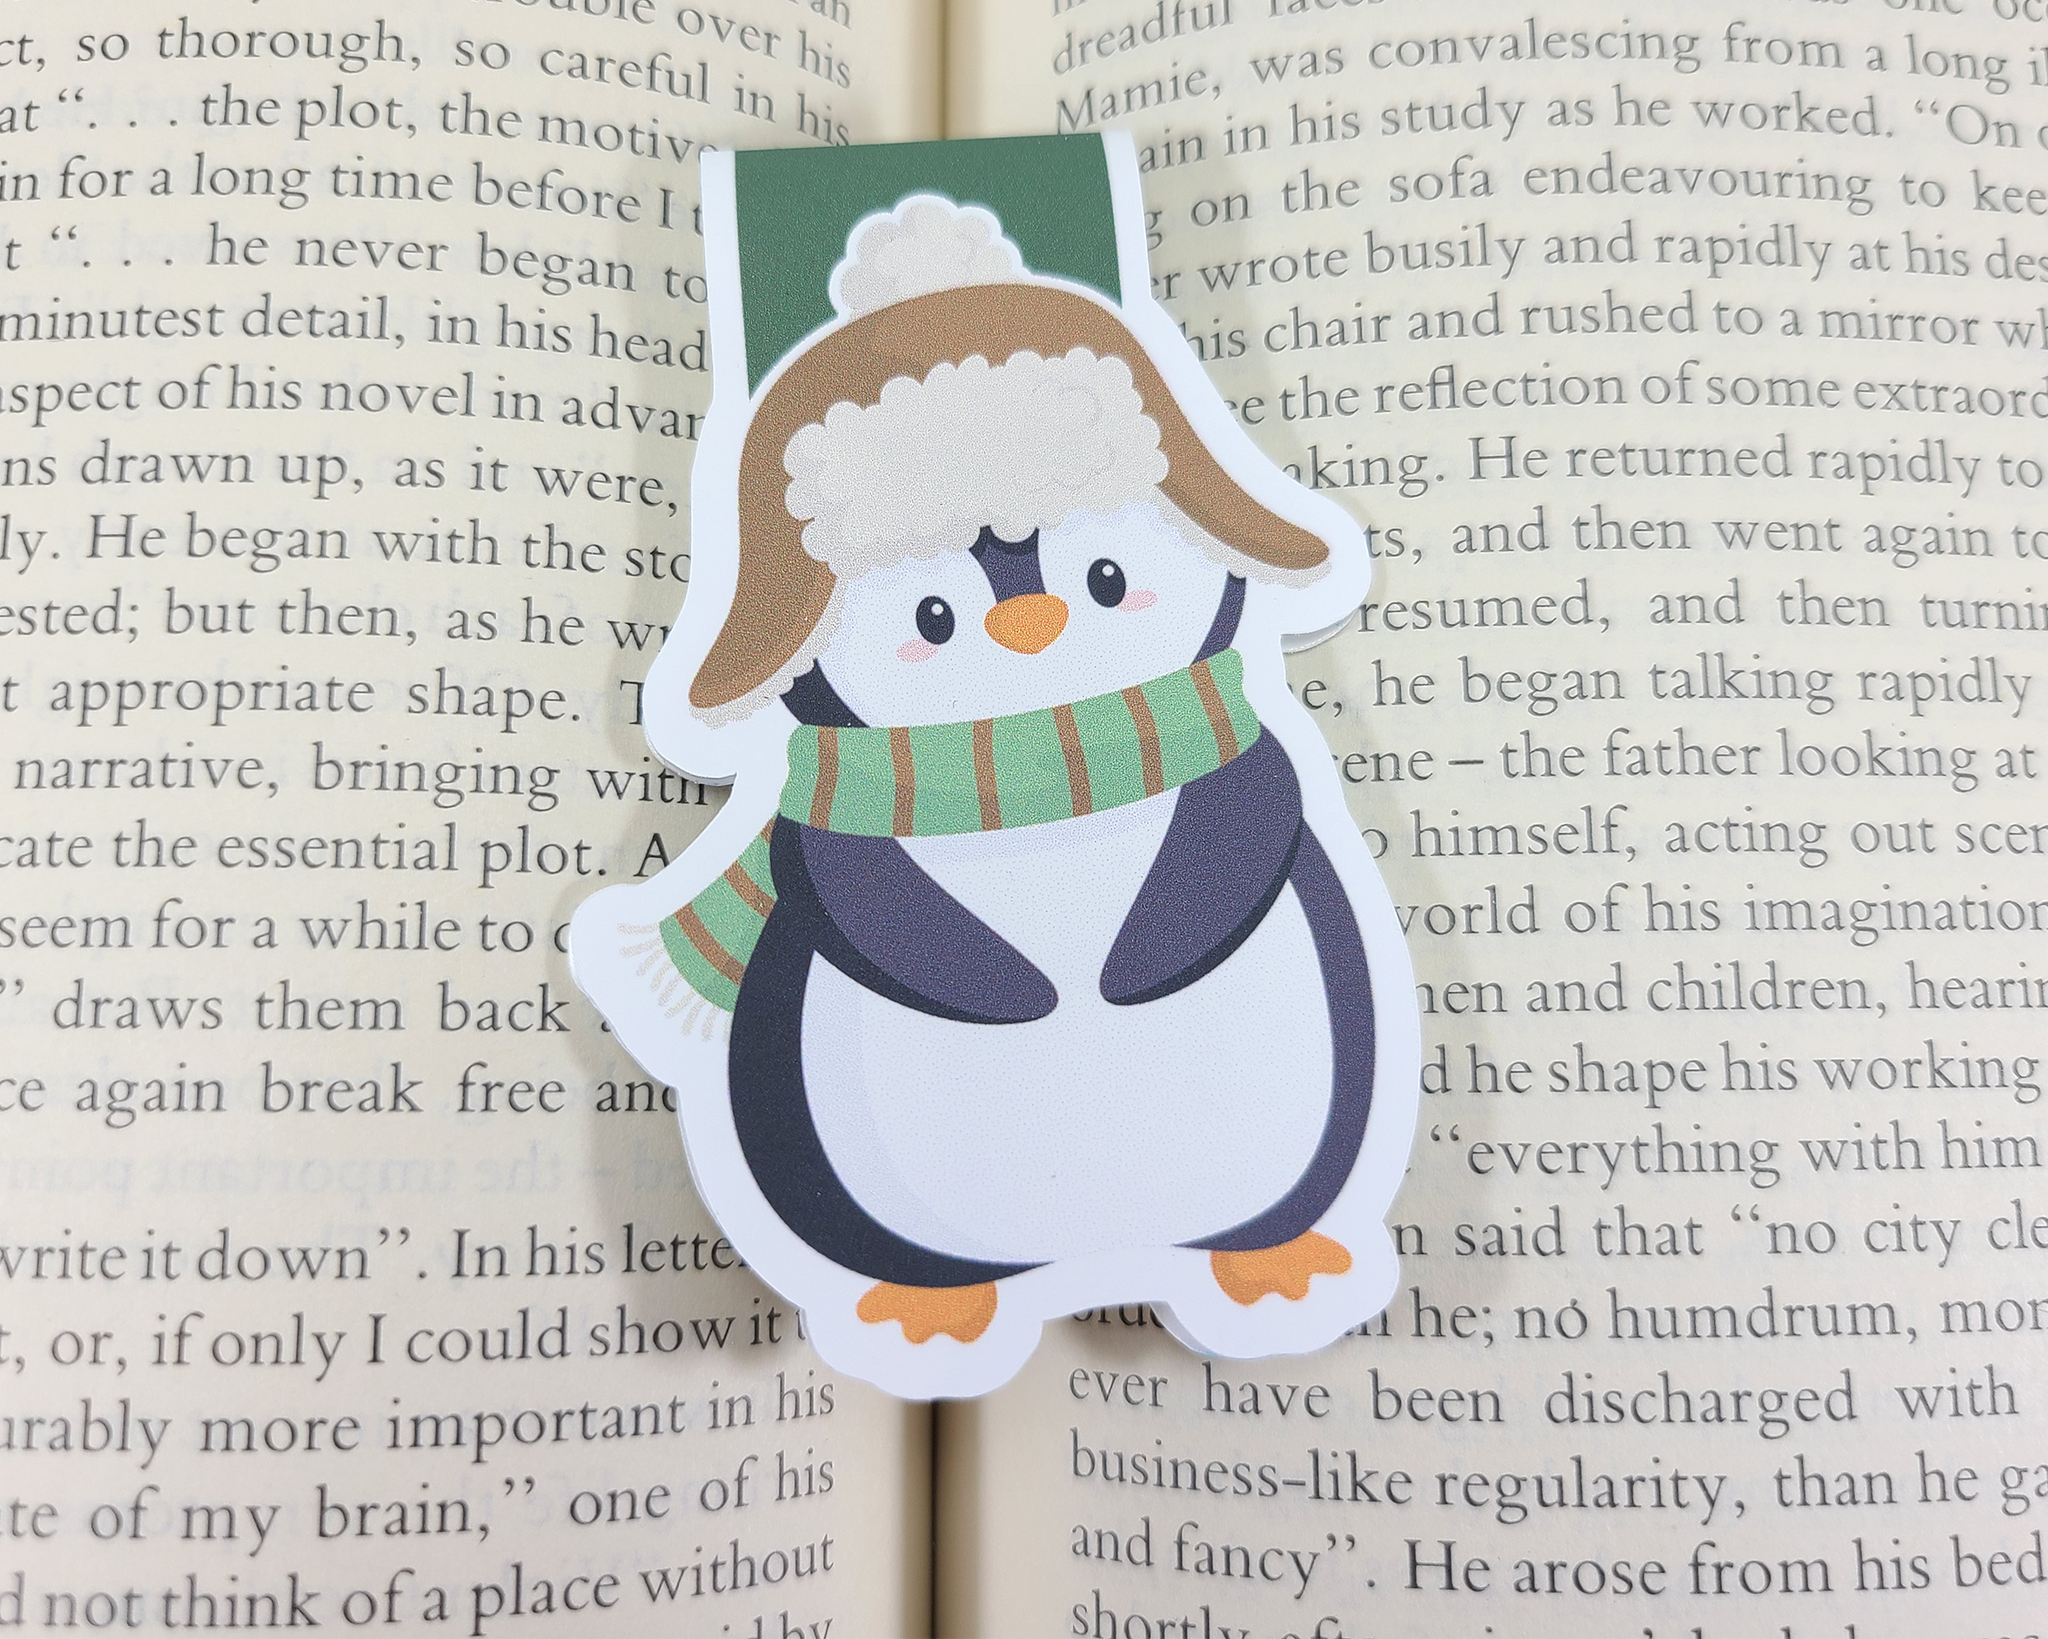 Penguin Winter Magnetic Bookmark